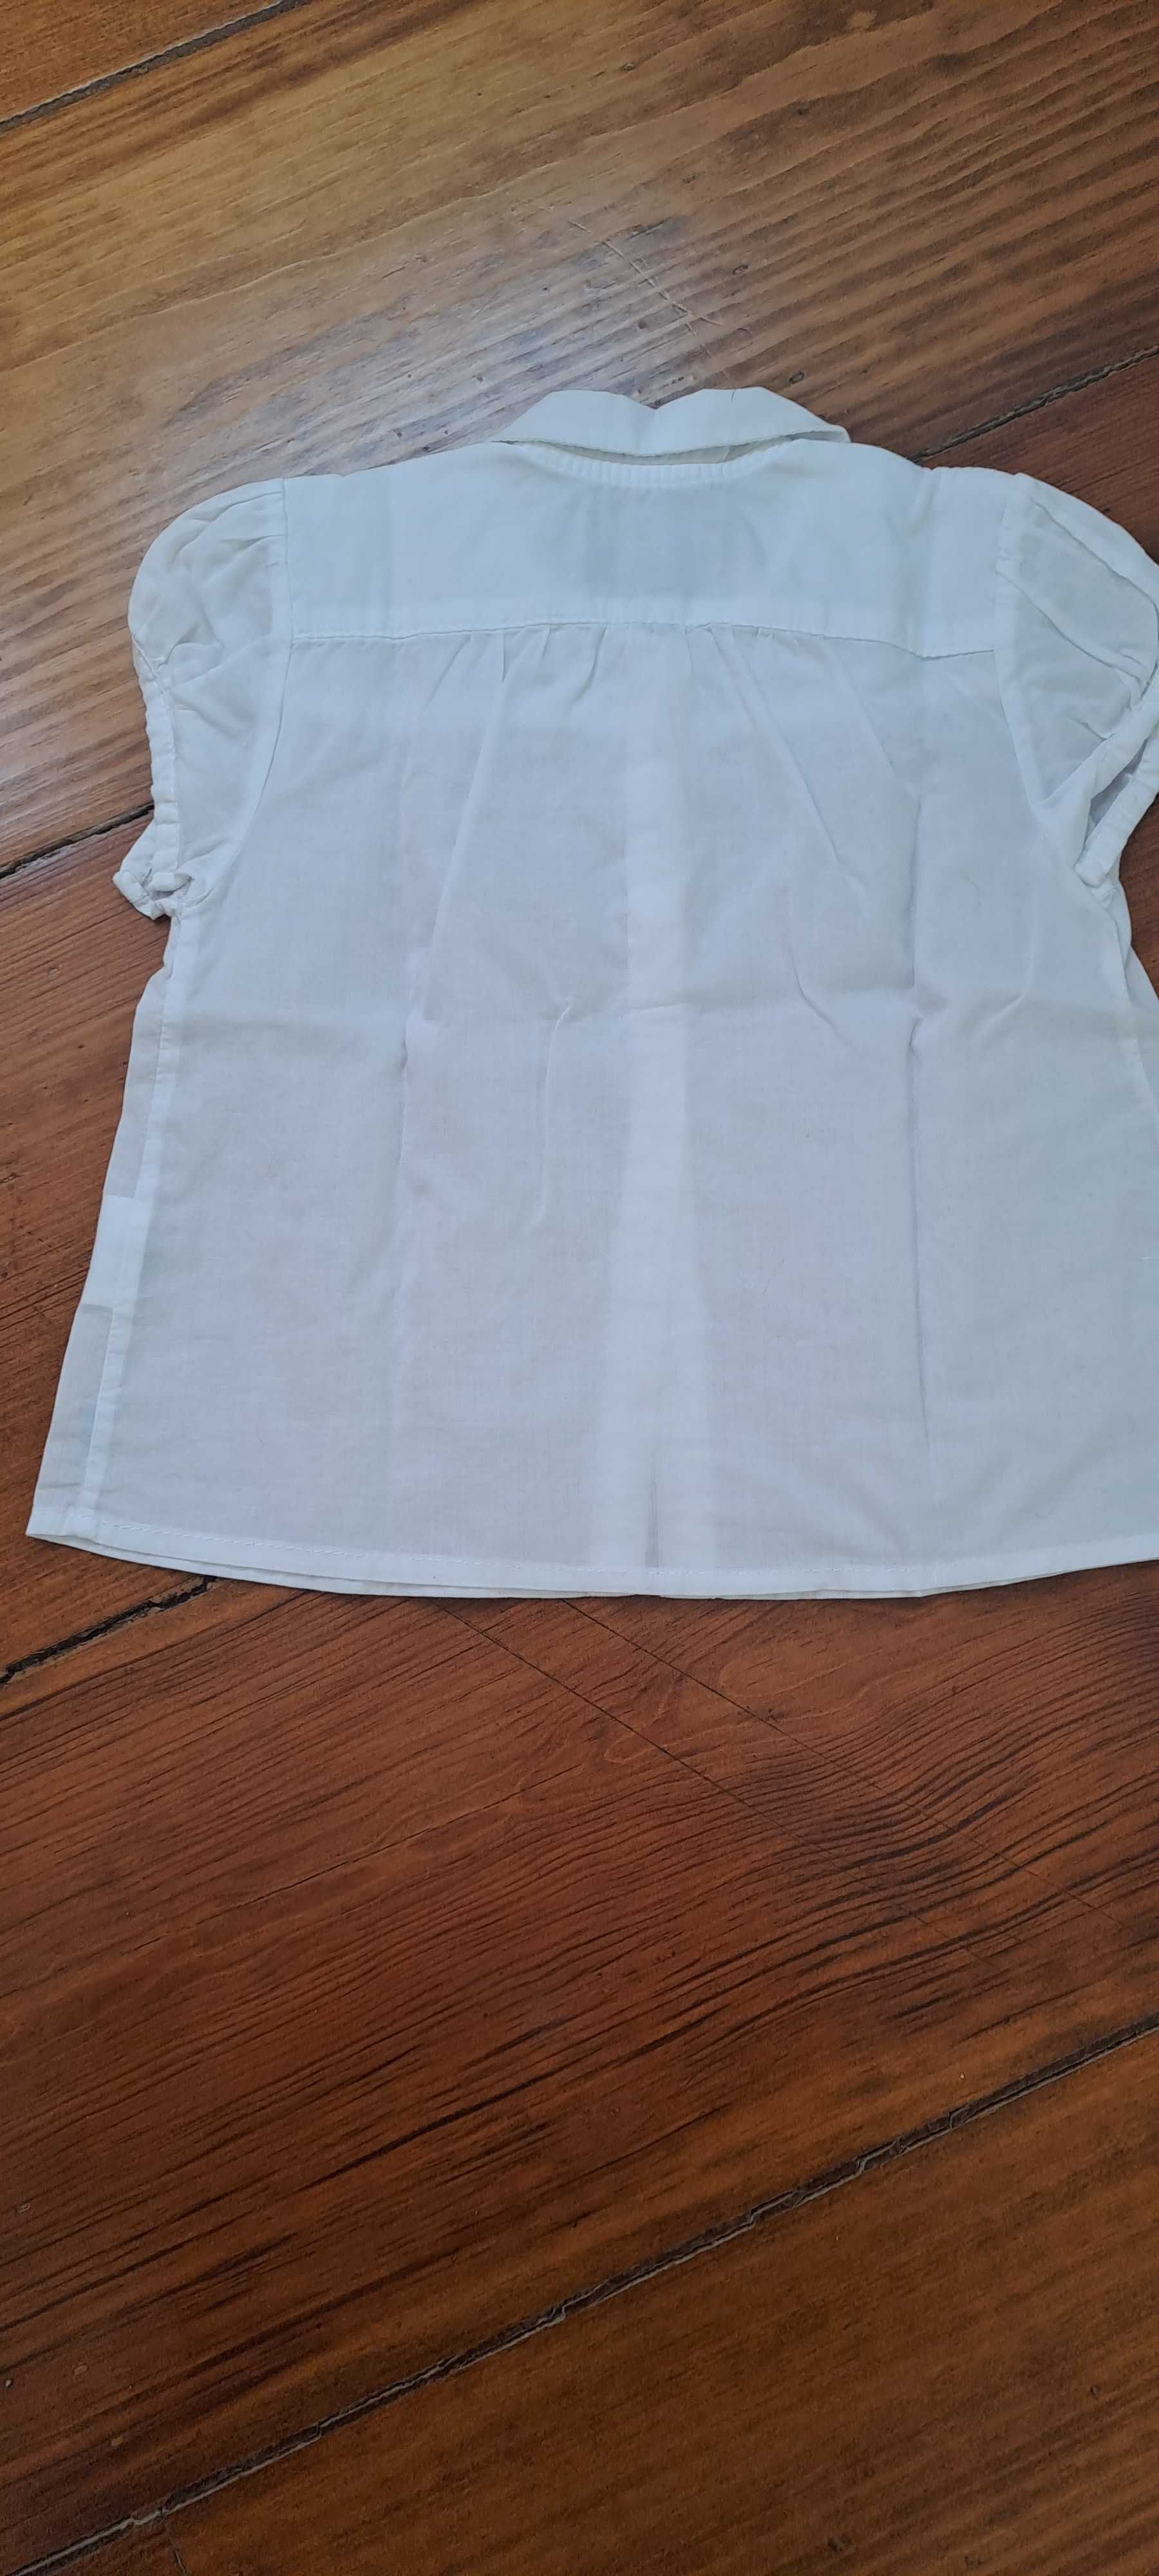 Camisa branca Lanidor 6 meses